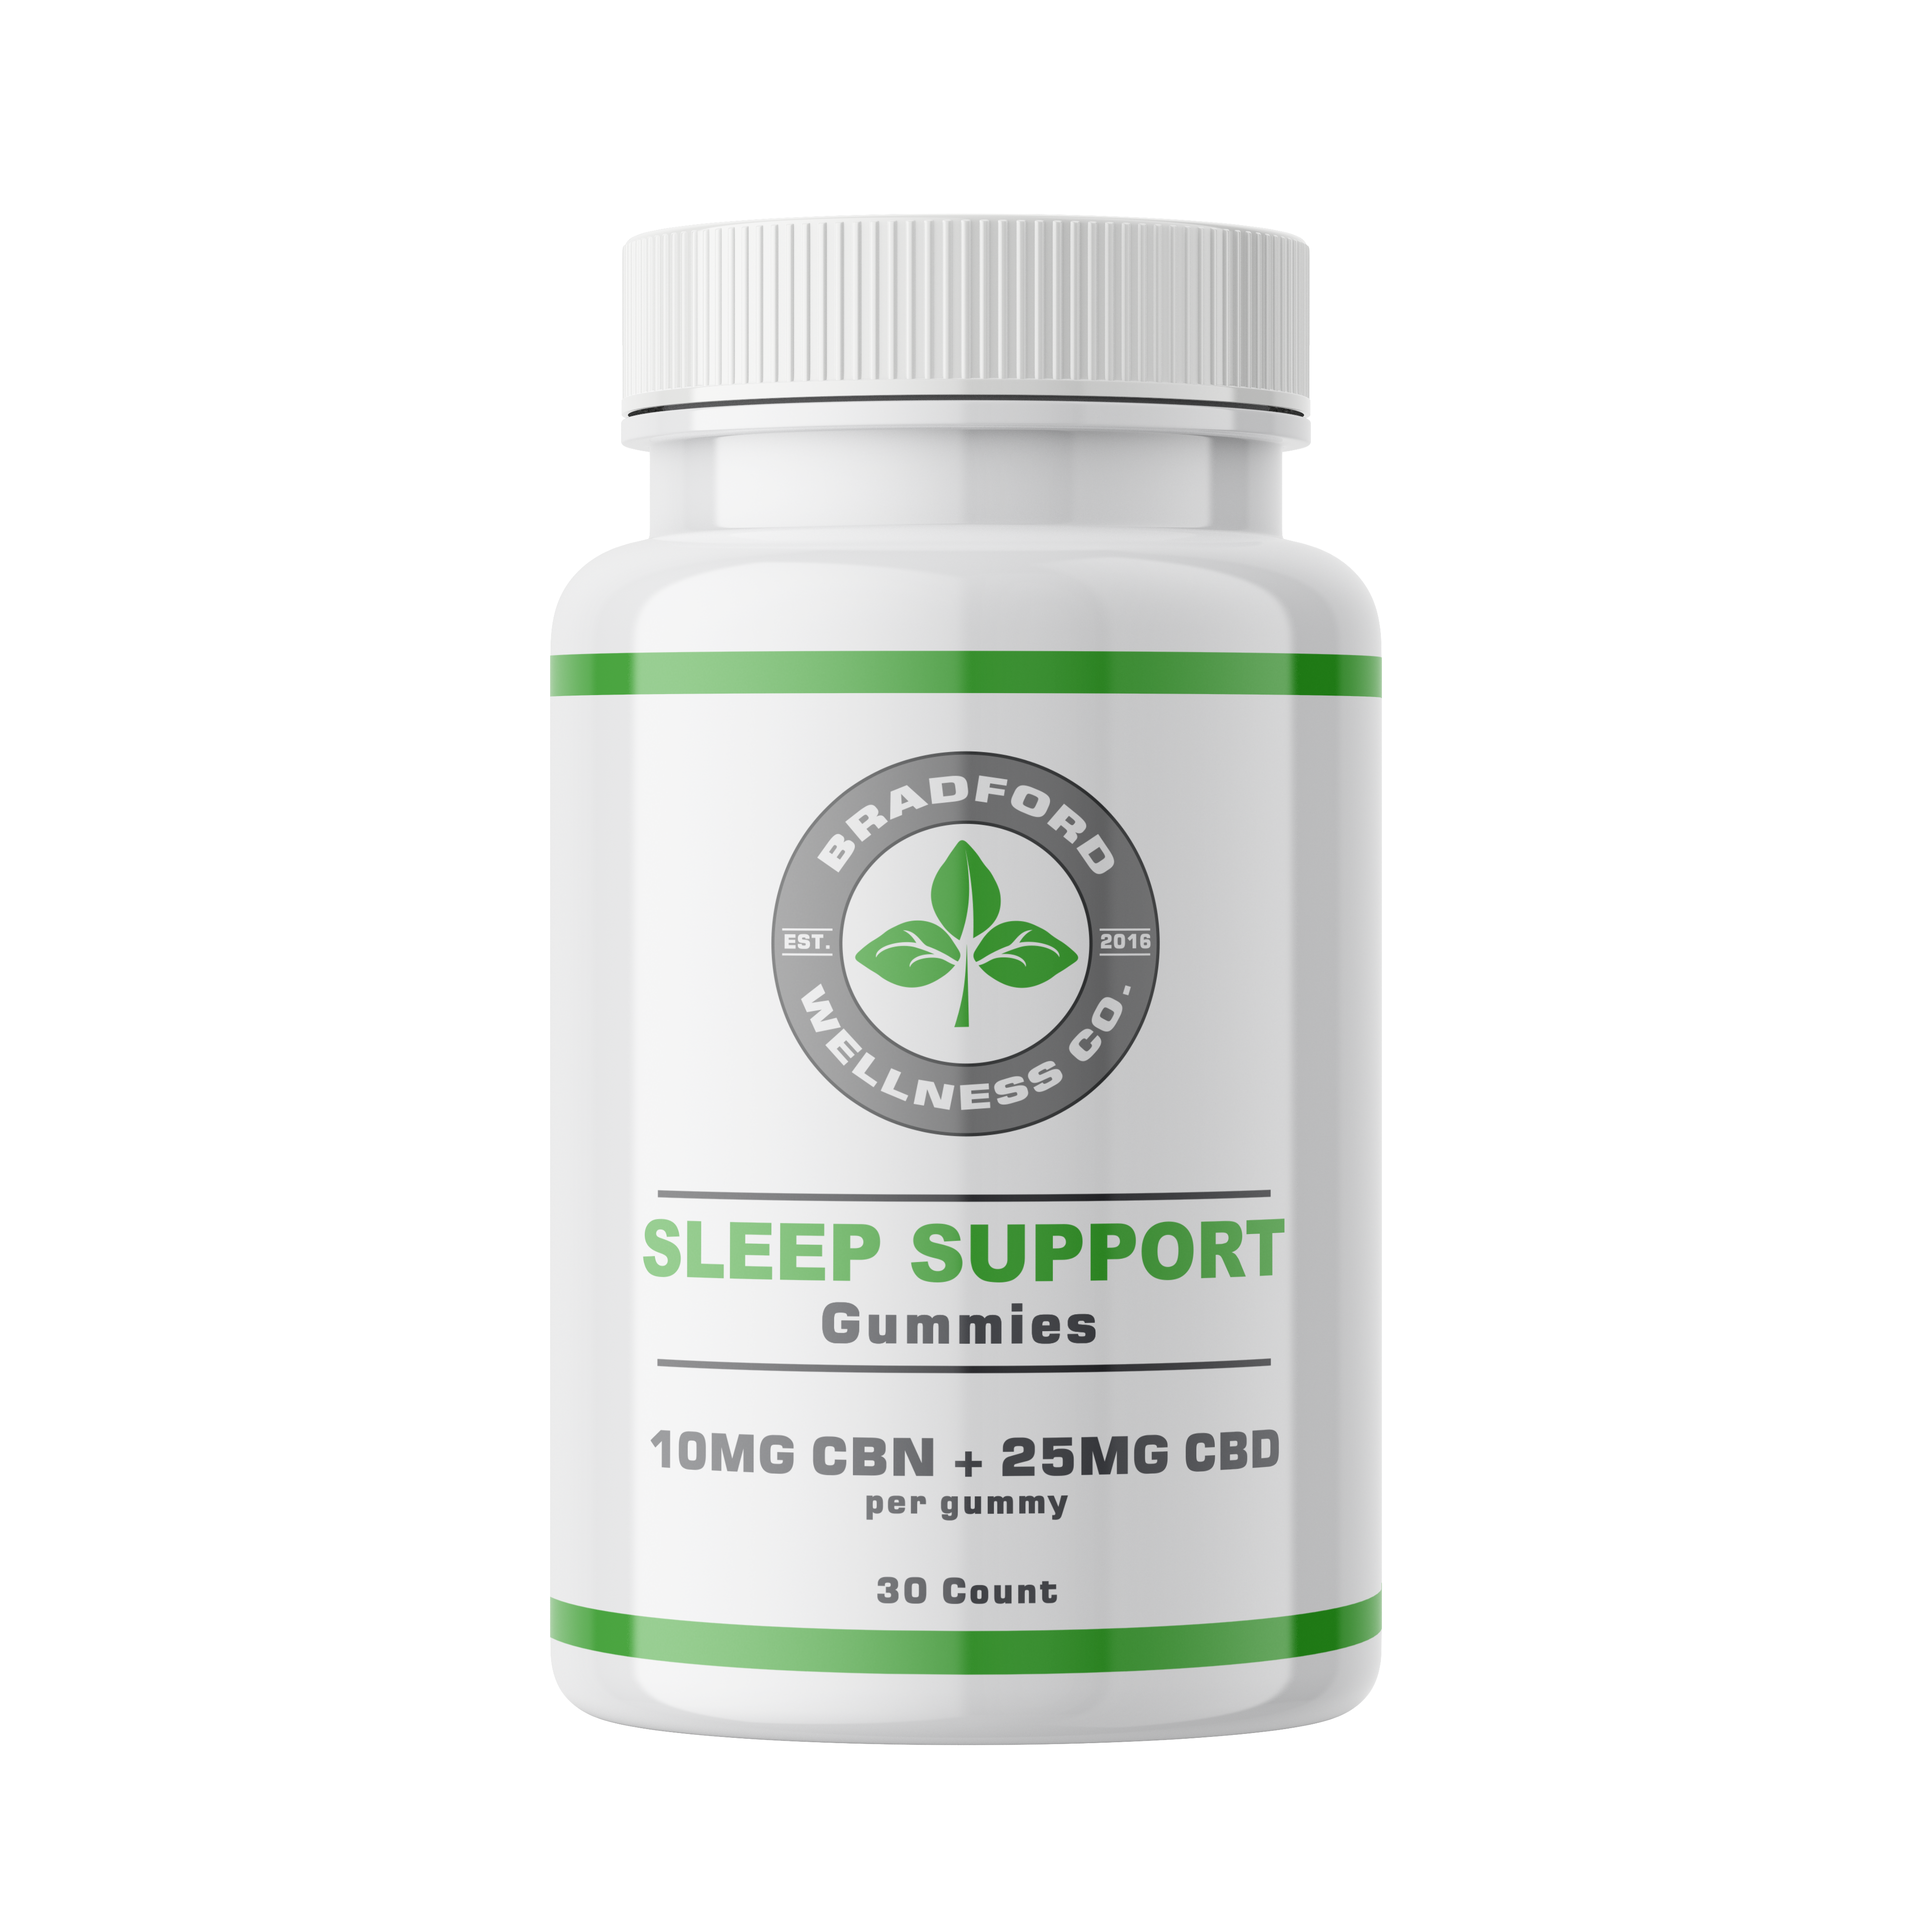 Sleep Support Gummies 10mg CBN + 25mg CBD - Bradford Wellness Co.